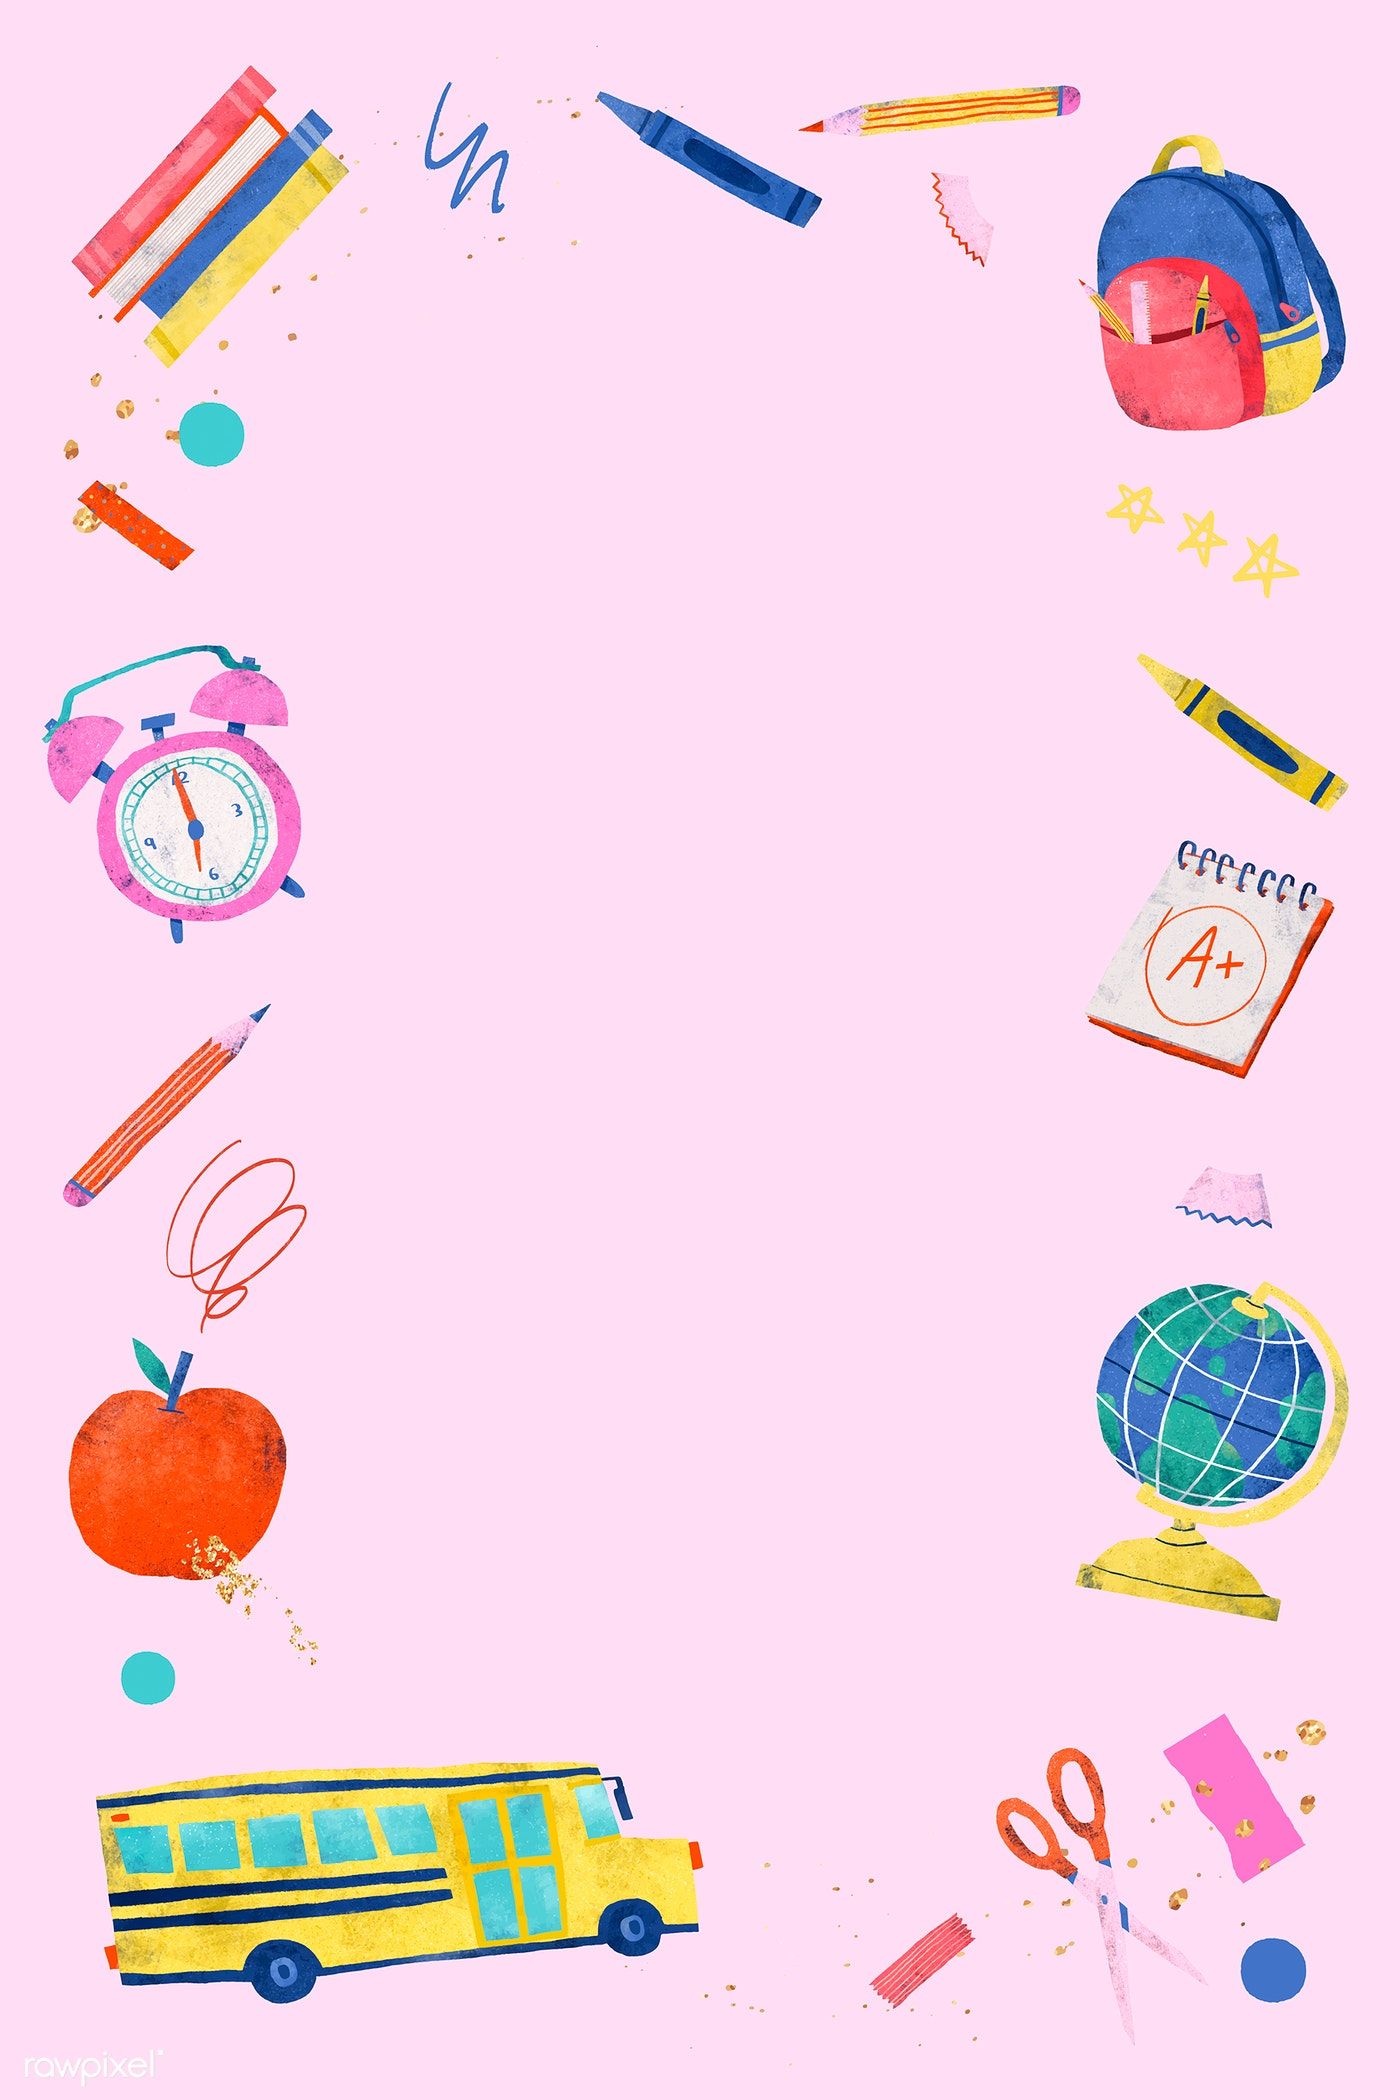 Blank pink back to school frame vector. premium image / Toon. School frame, Blank pink, School posters